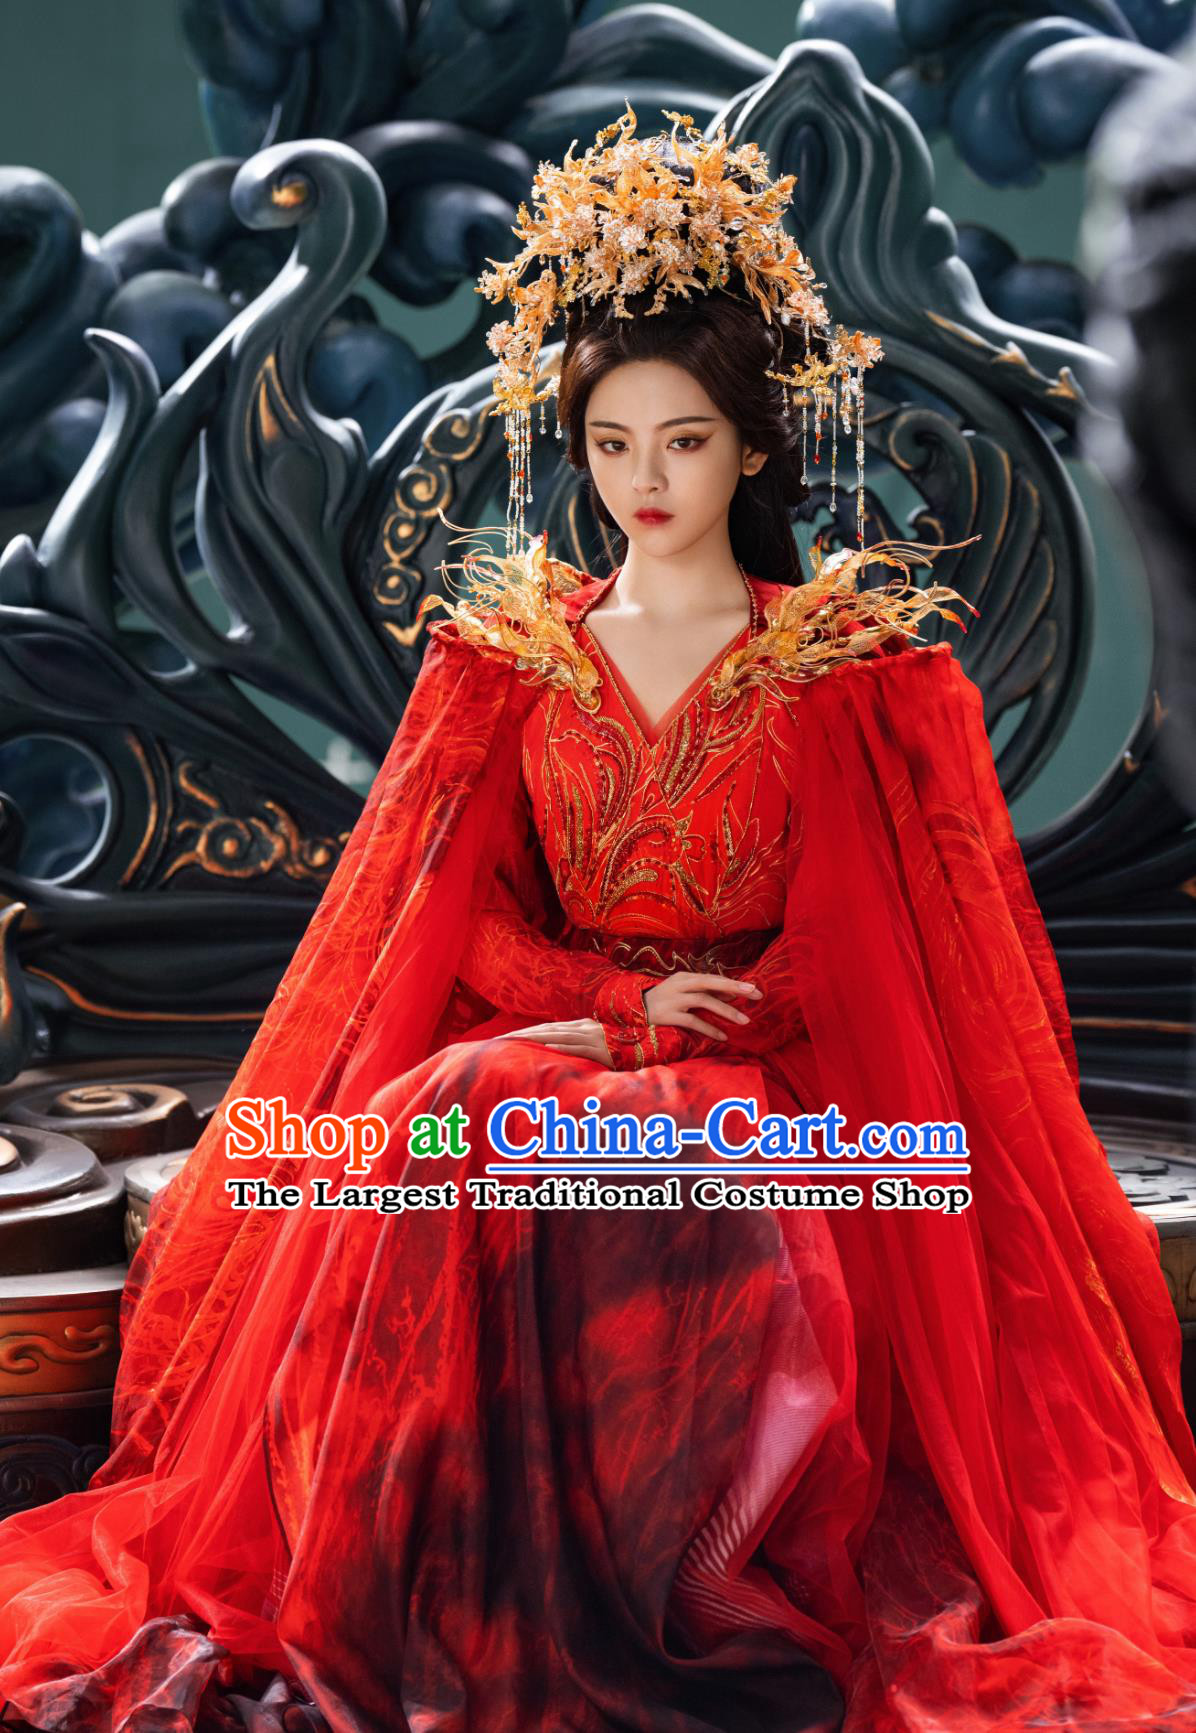 China Traditional Wedding Dress Ancient Bride Clothing TV Drama Love You Seven Times Fairyu Xiang Yun Costumes